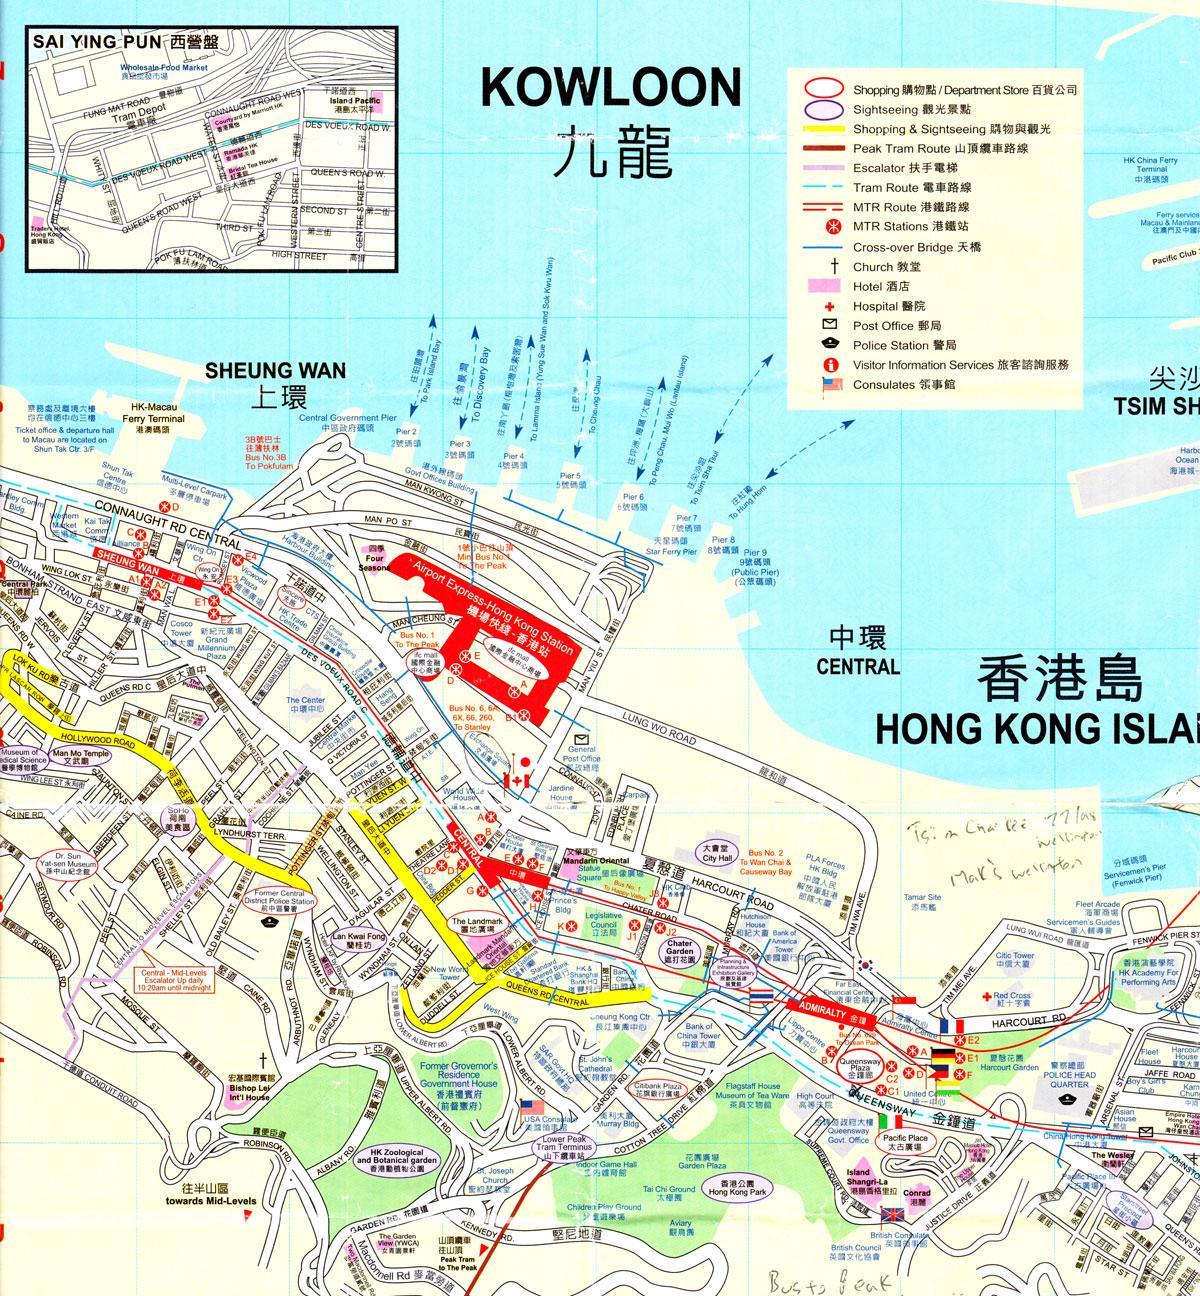 satama Hong Kong kartta